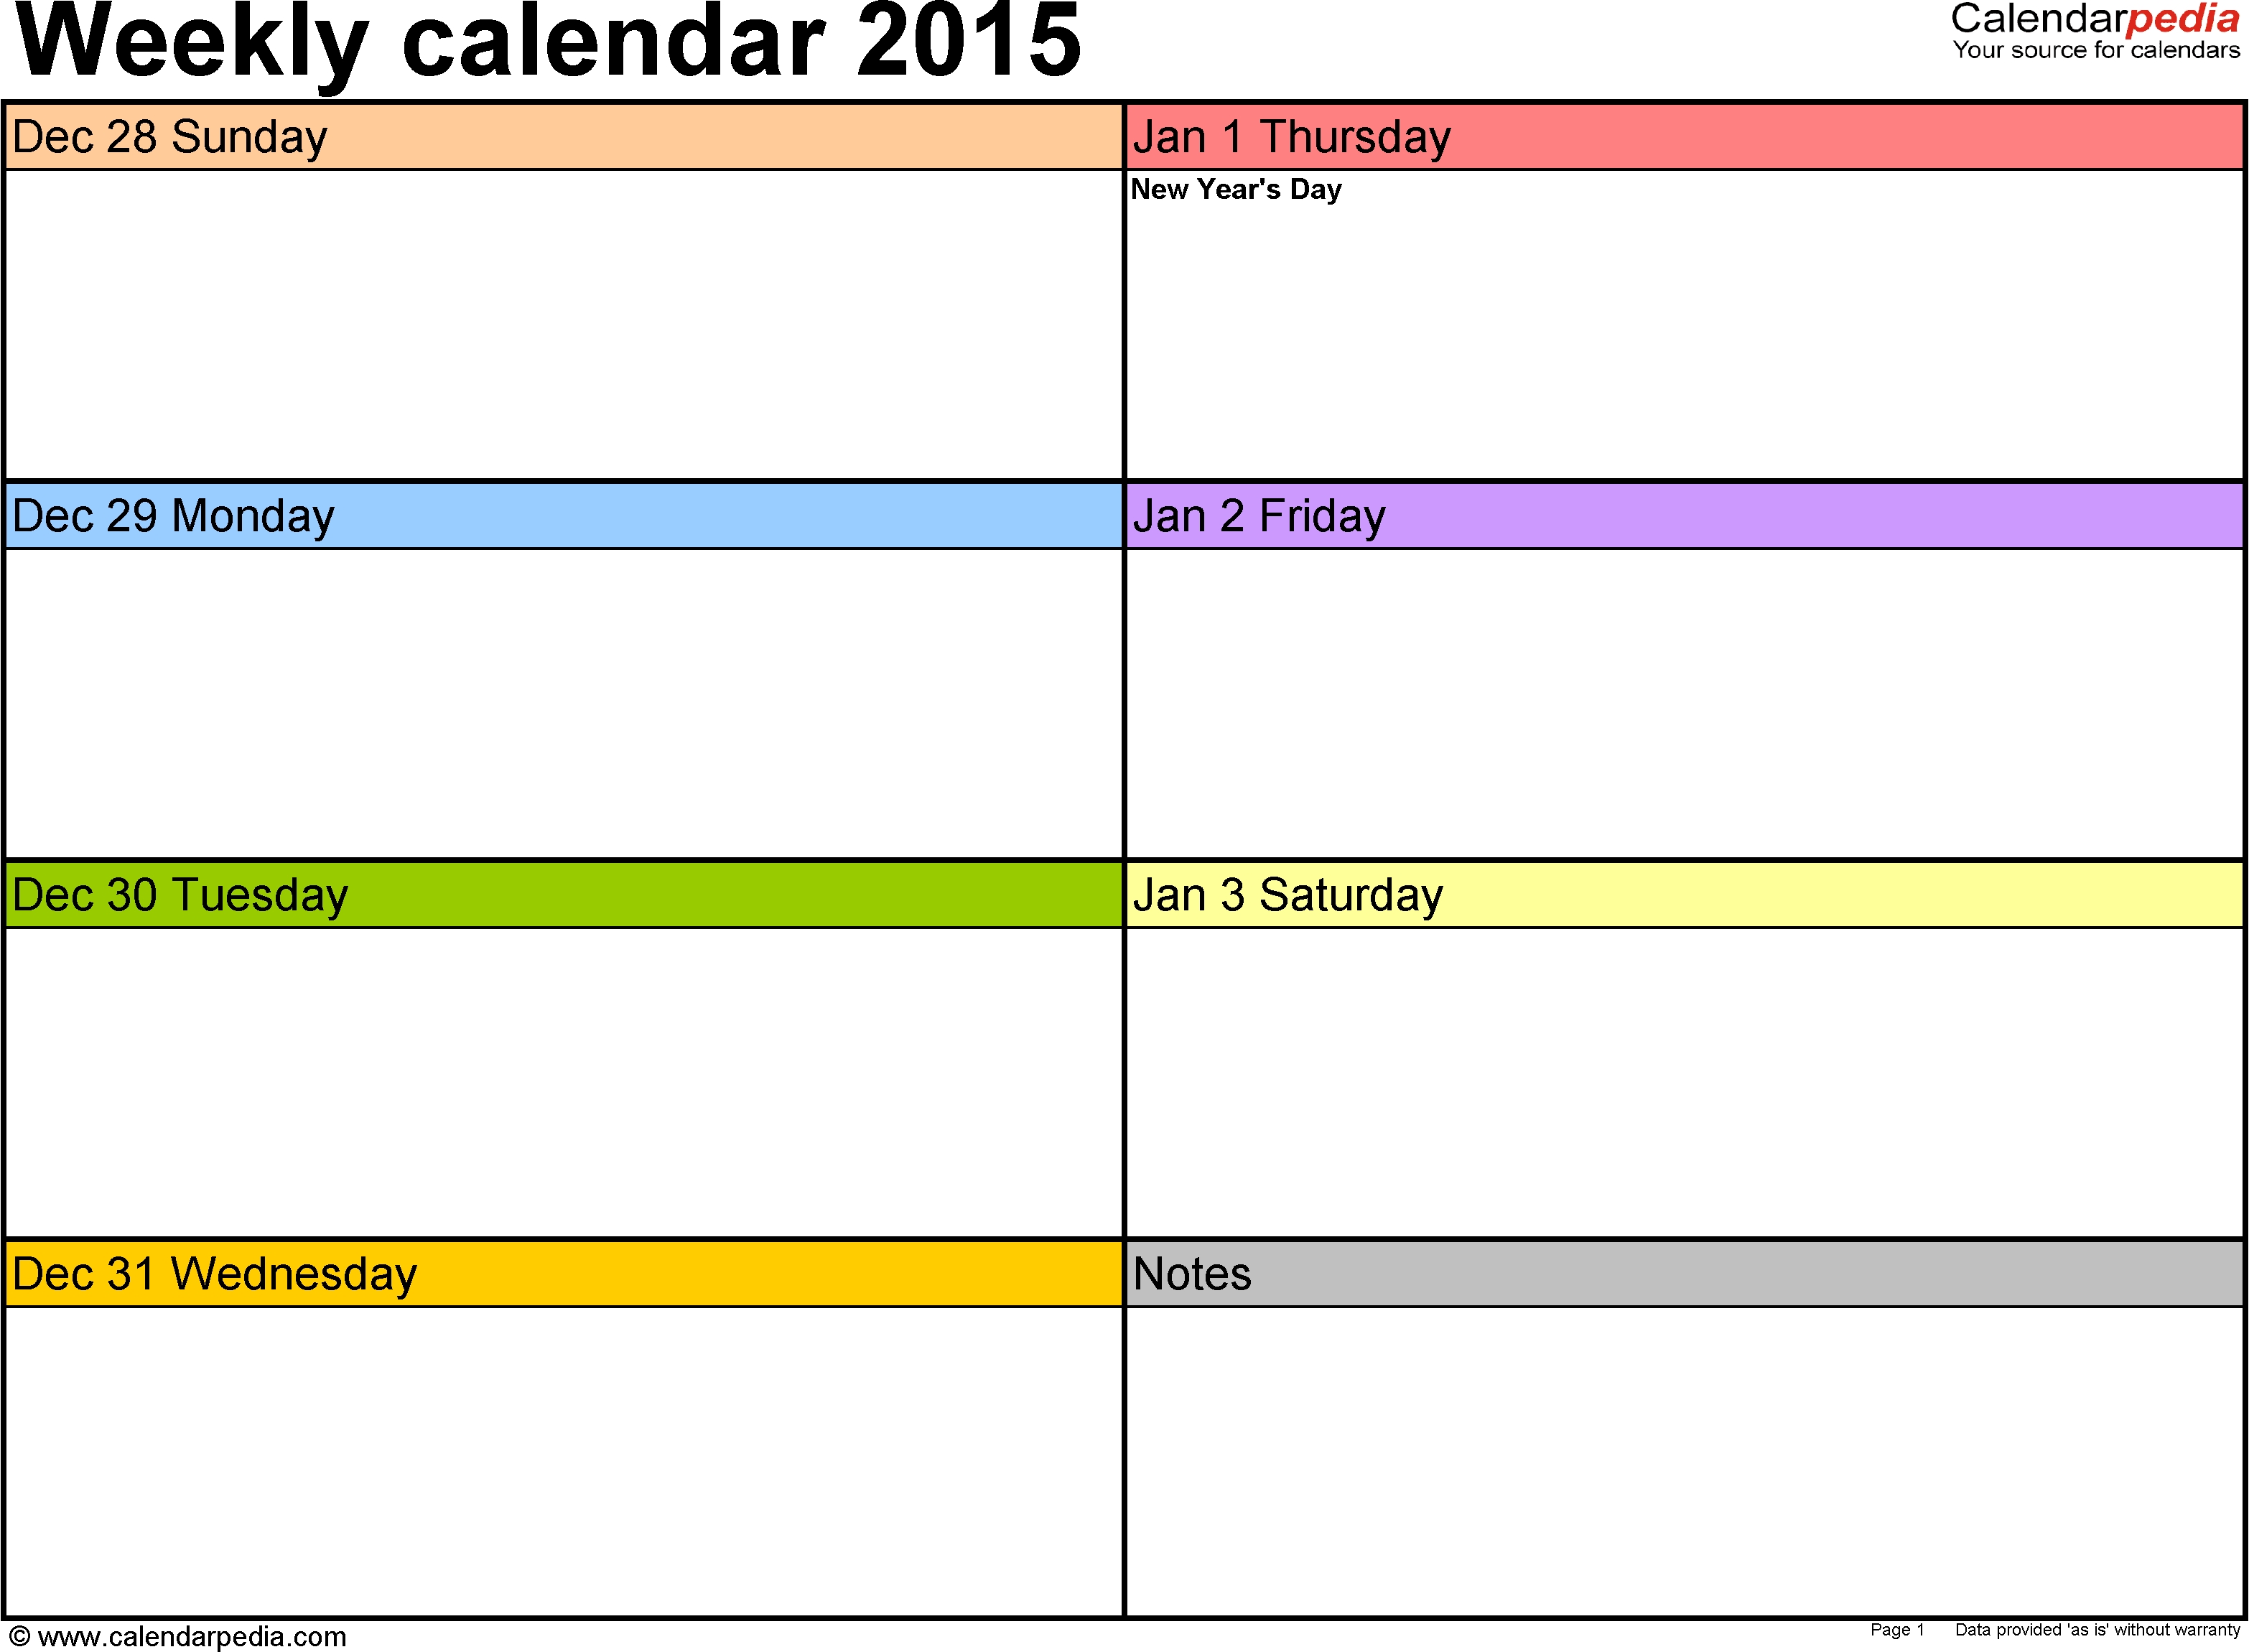 Weekly Calendar 2015 For Pdf - 12 Free Printable Templates regarding Blank Calendar 5 Day Week With Times